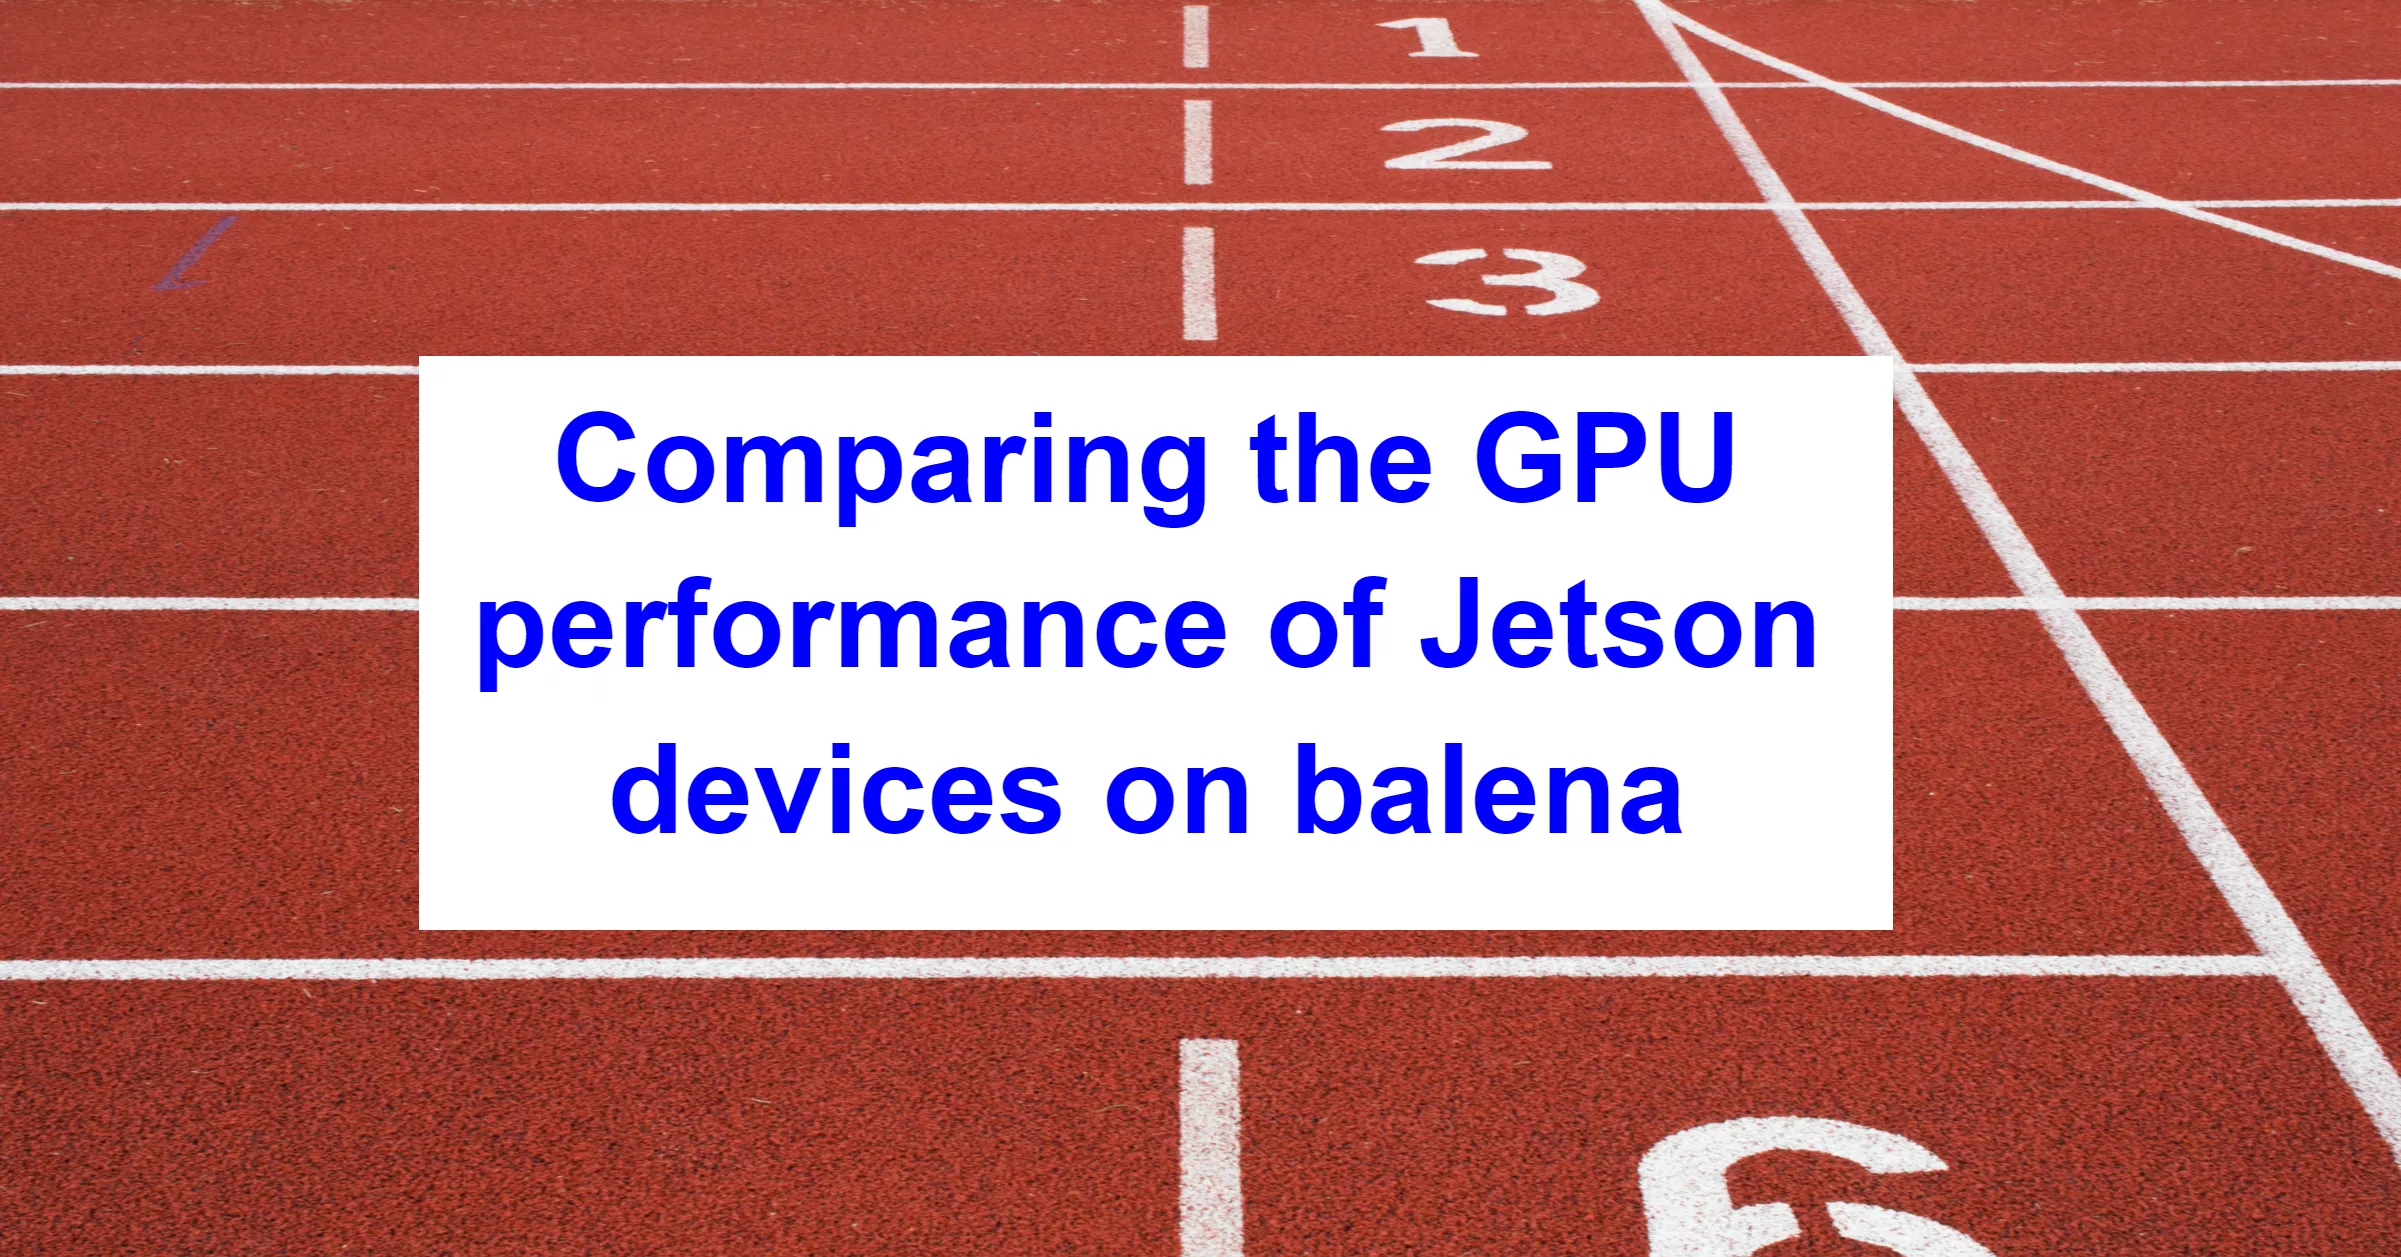 Comparing performance of Jetson GPUs on balena